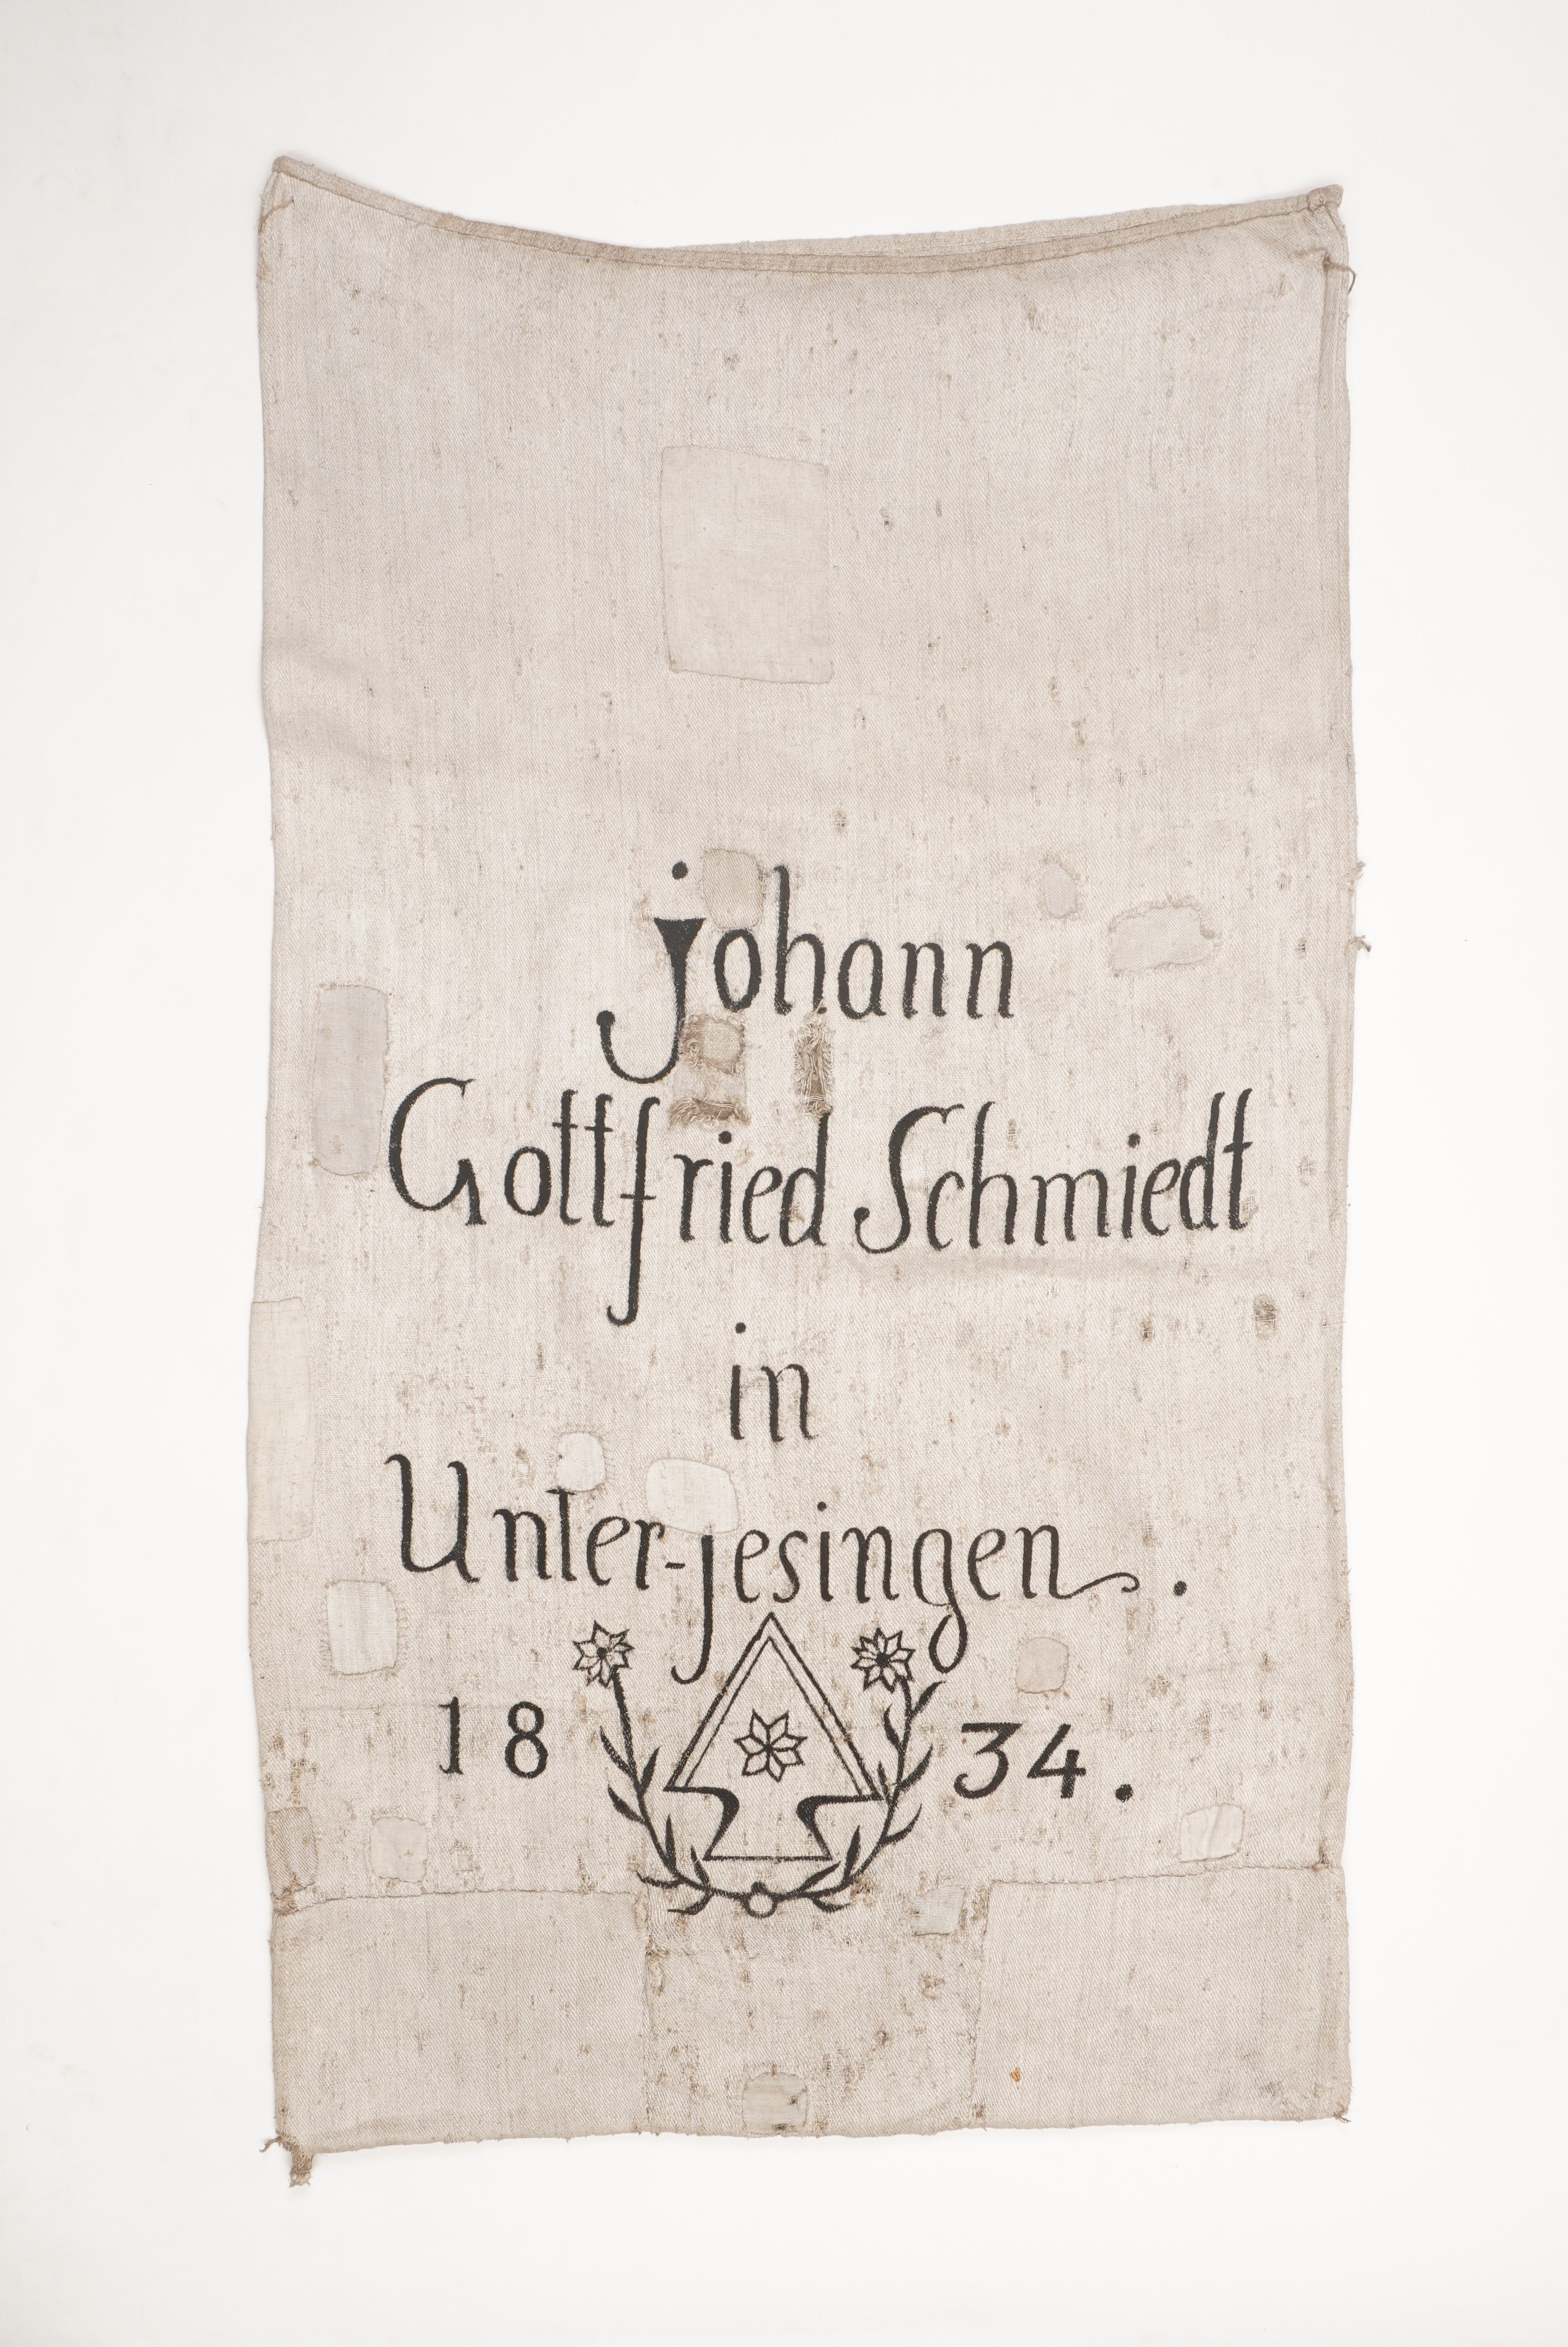 Getreidesack "Johann Gottfried Schmiedt" (Förderkreis Unterjesinger Kelter e.V. CC BY-NC-SA)